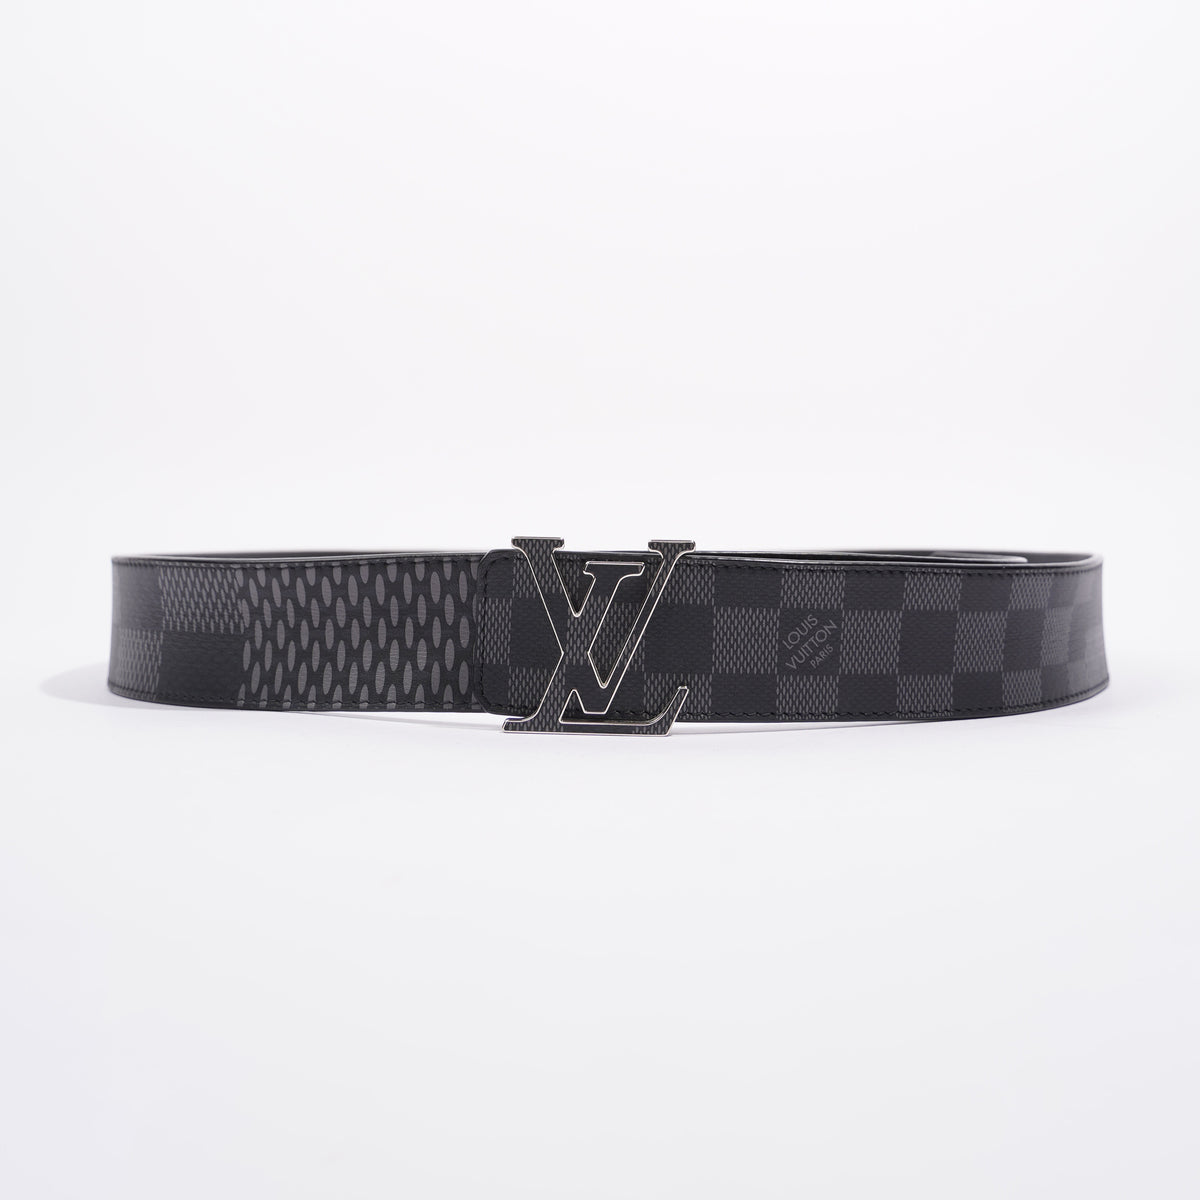 Lv checkered belts Damier azur and graphite : r/designerdupes